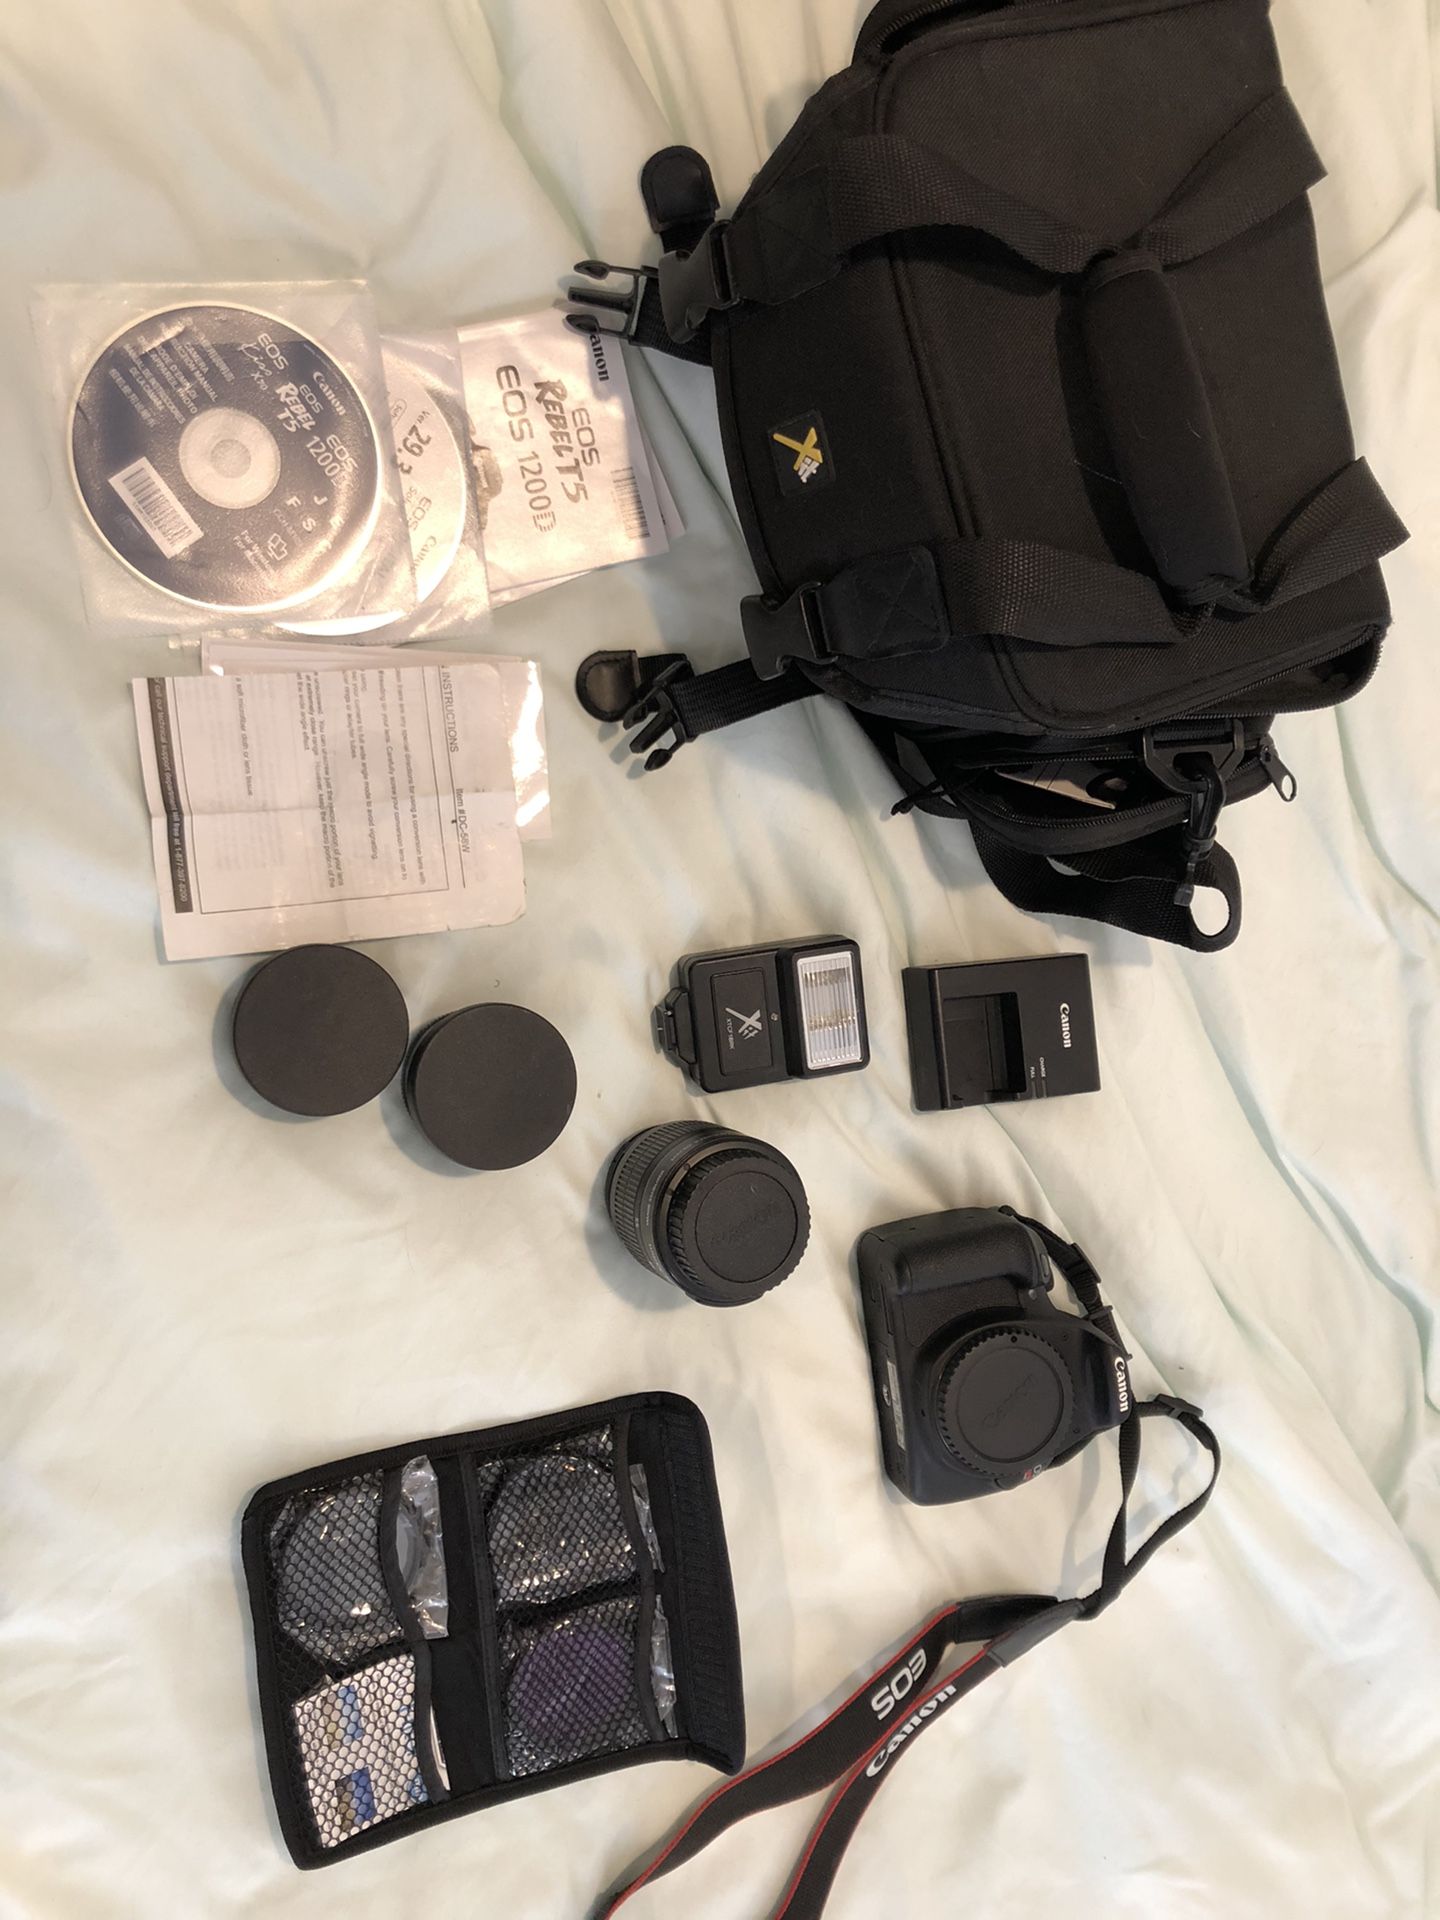 Canon rebel T5 camera Kit